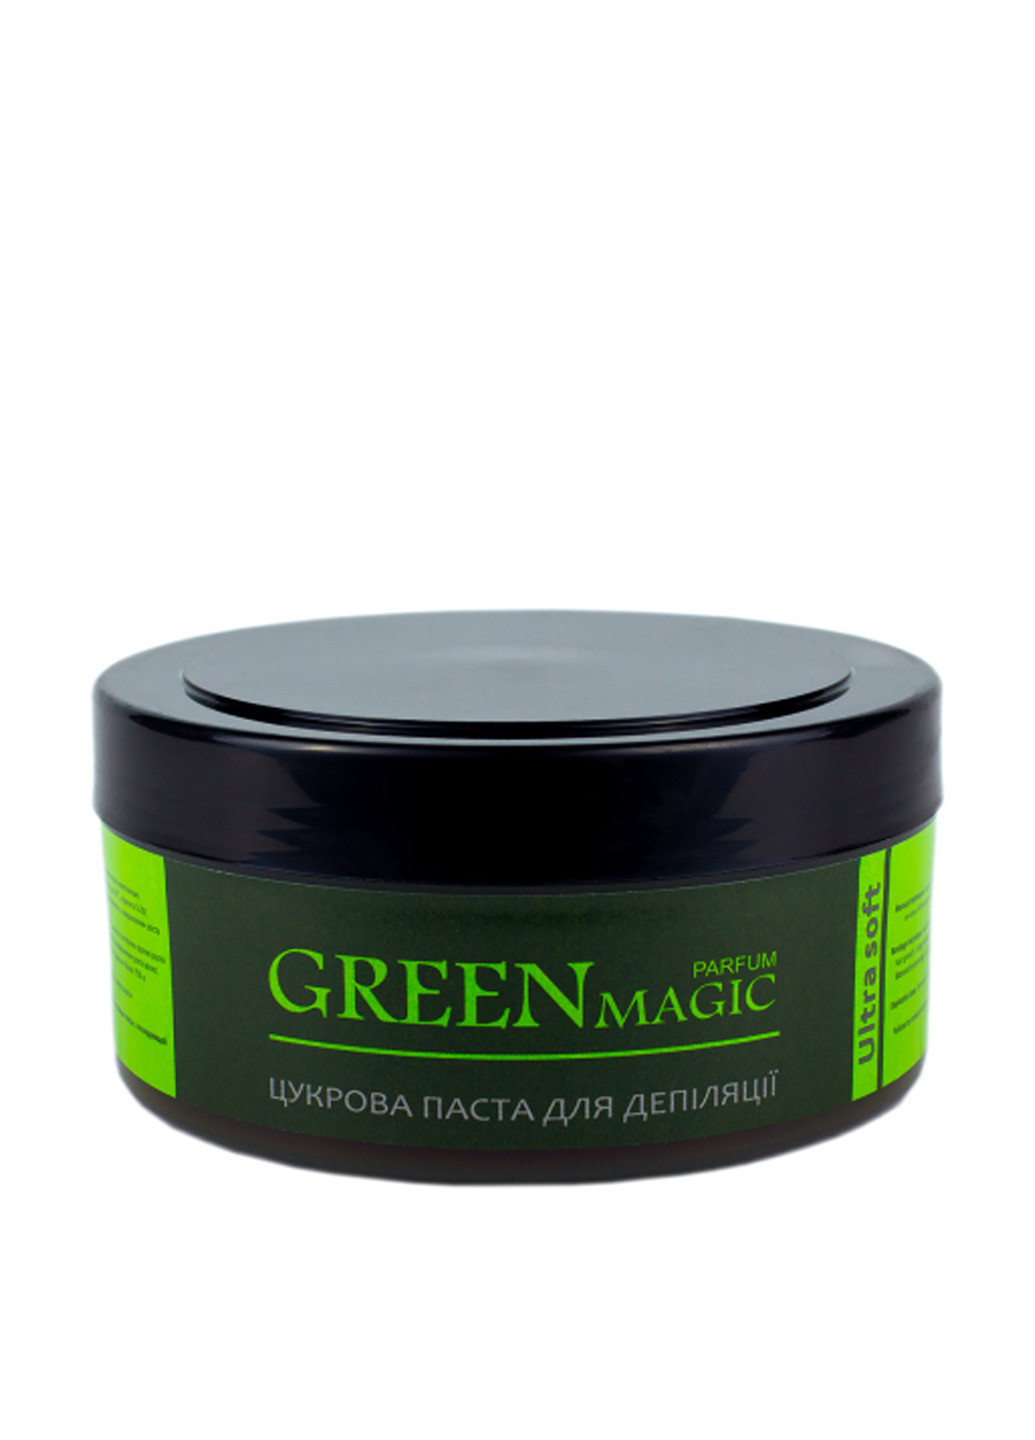 Паста парфюмированная сахарная для депиляции Ультра мягкая Green Magic, 400 г Silk & Soft (89126807)